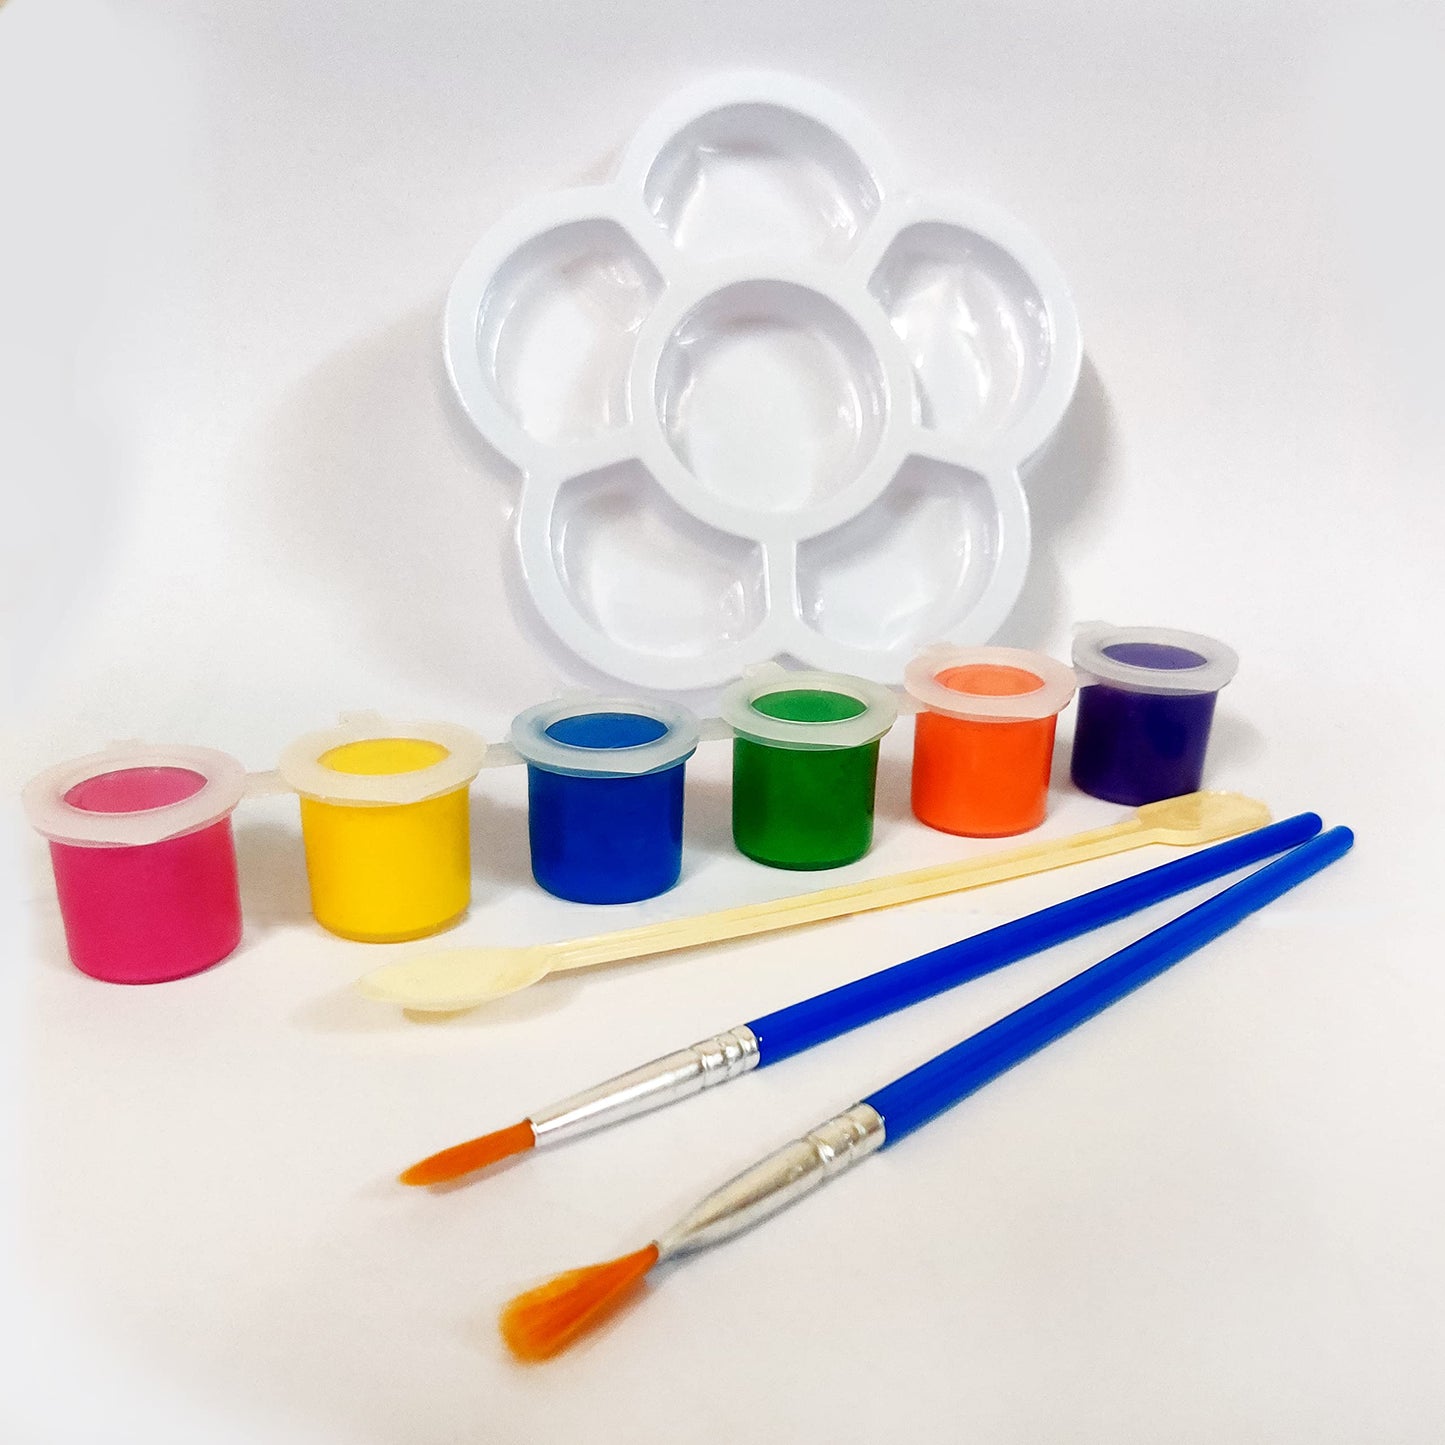 AZi® Paint Your Own Ceramic Tea Set | Ceramic Paint Art Creativity Art Craft Kit for Kids | Lovely Color Beautiful Ceramic Toy | Multicolor